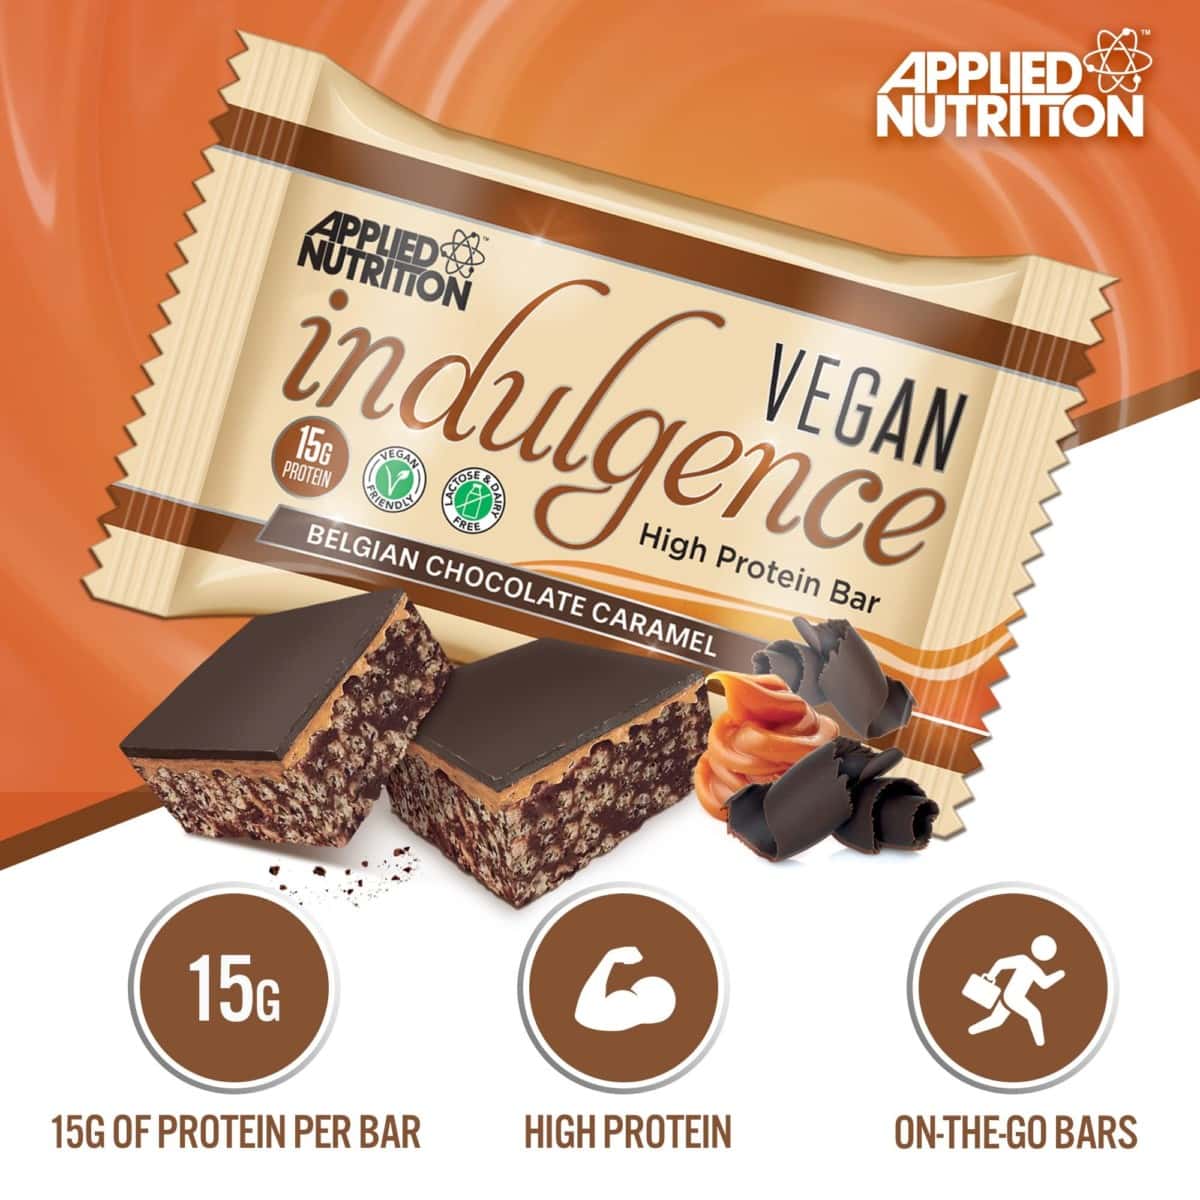 Applied Nutrition - Vegan indulgence - applied nutrition vegan indulgence vuagym